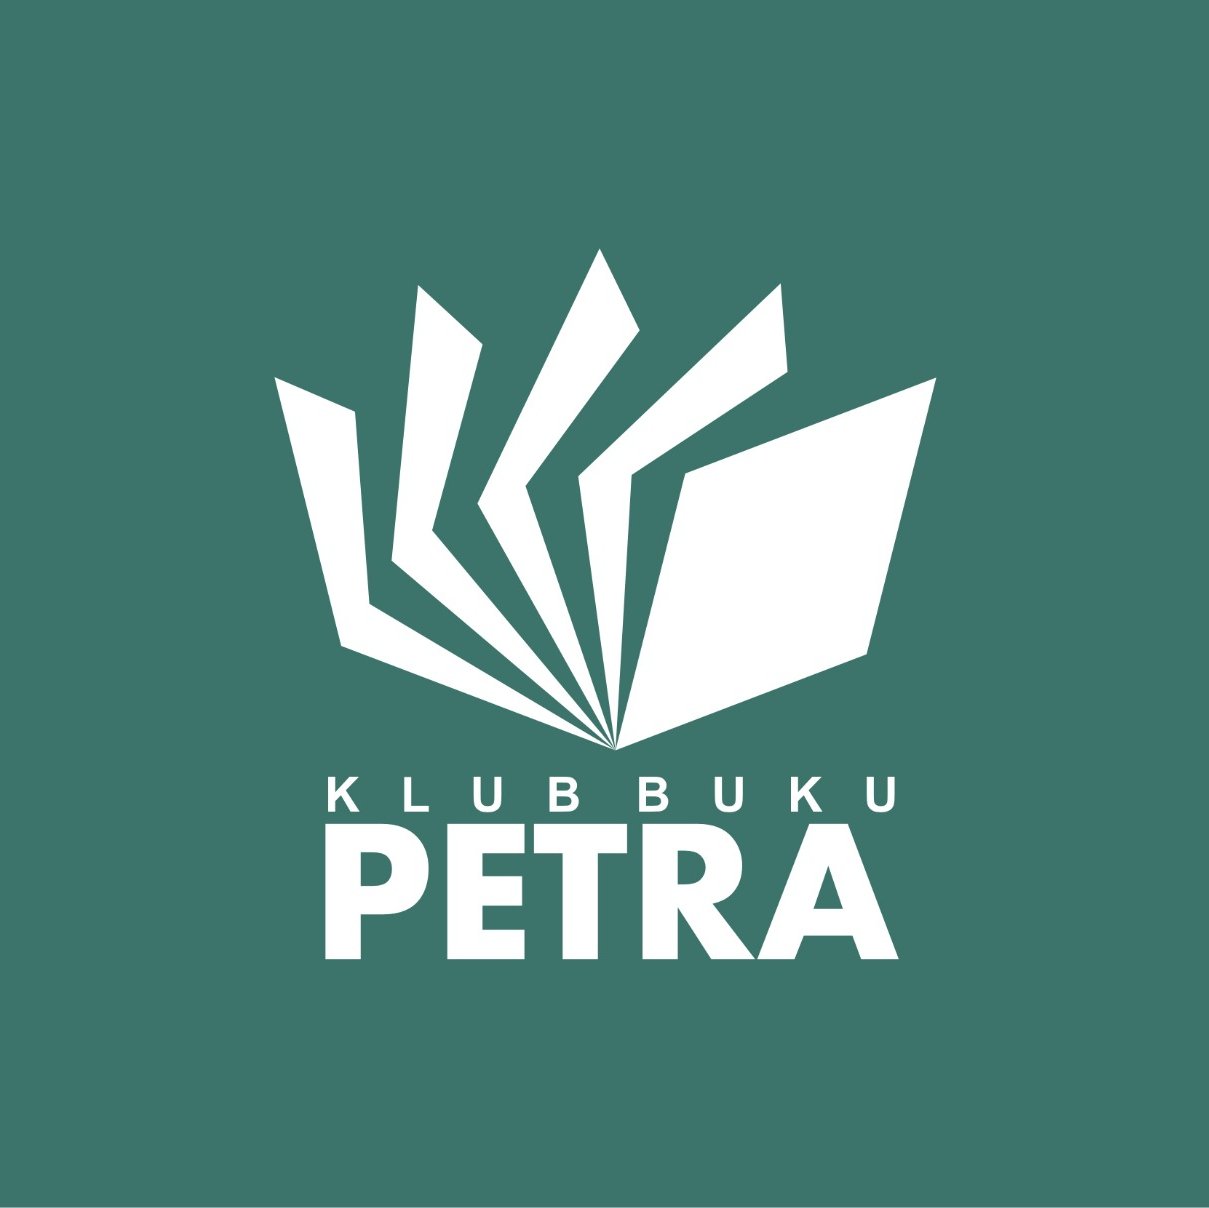 Klub Buku Petra adalah Komunitas Membaca yang aktif sejak 13 Juni 2013 di Ruteng.

Kunjungi Facebook & Instagram: @klubbukupetra